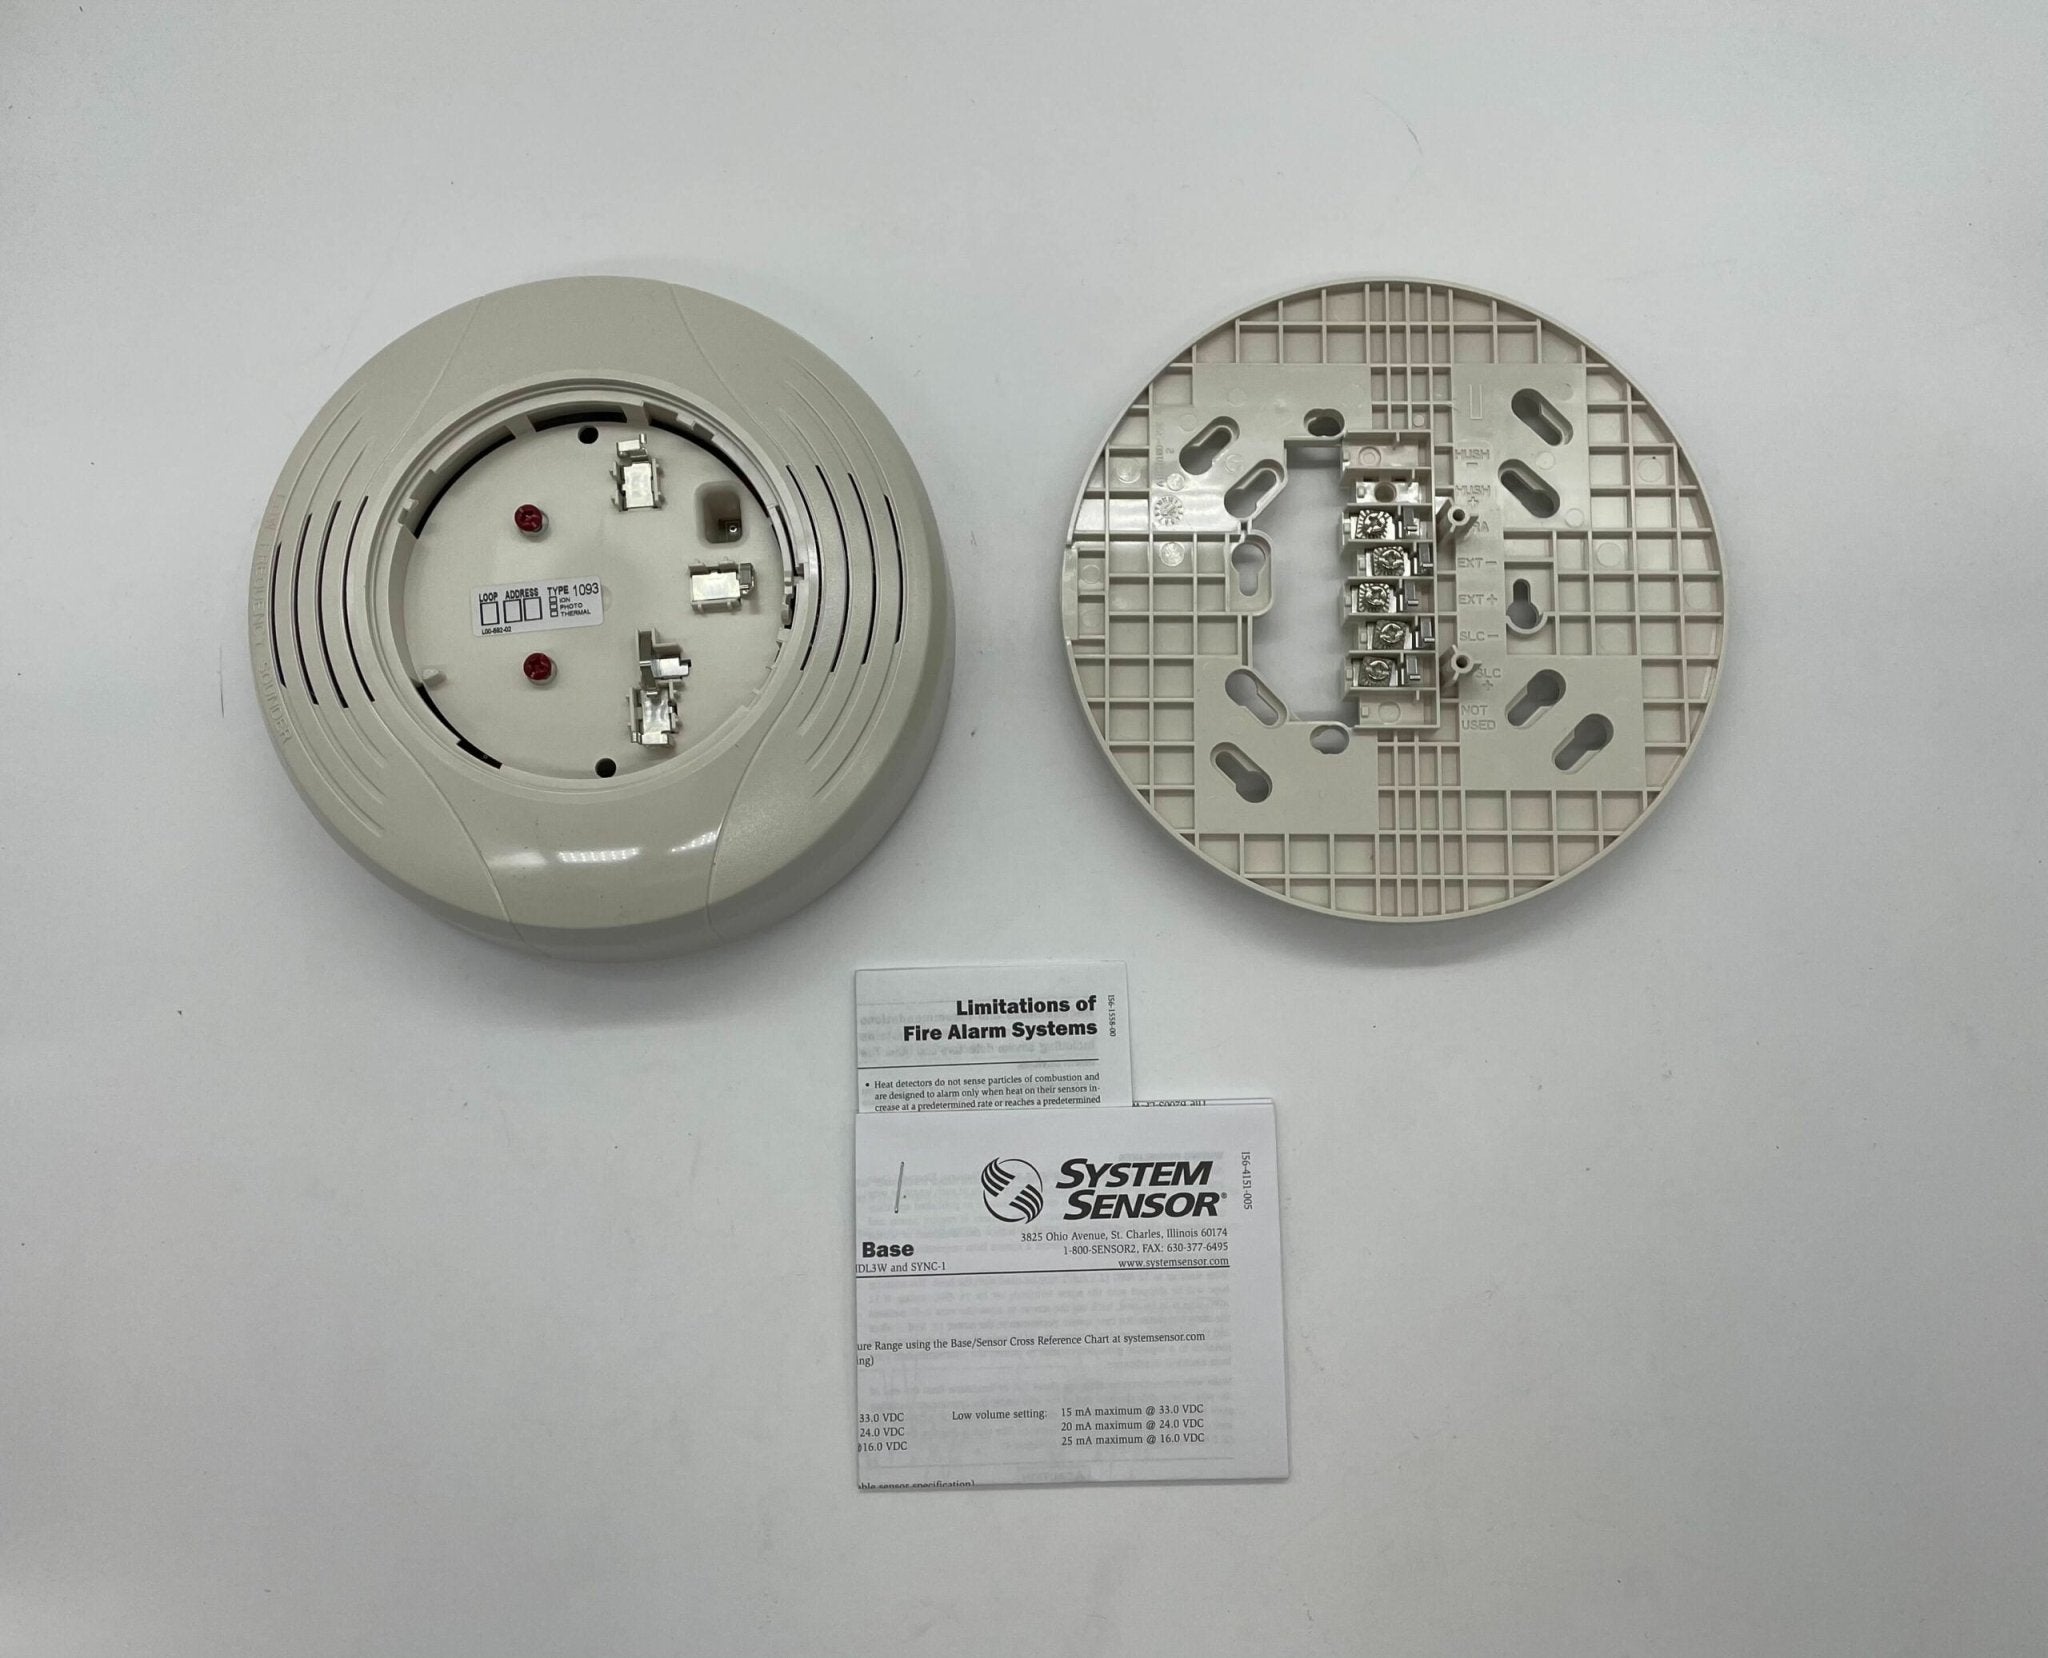 System Sensor B200S-LF-IV - The Fire Alarm Supplier